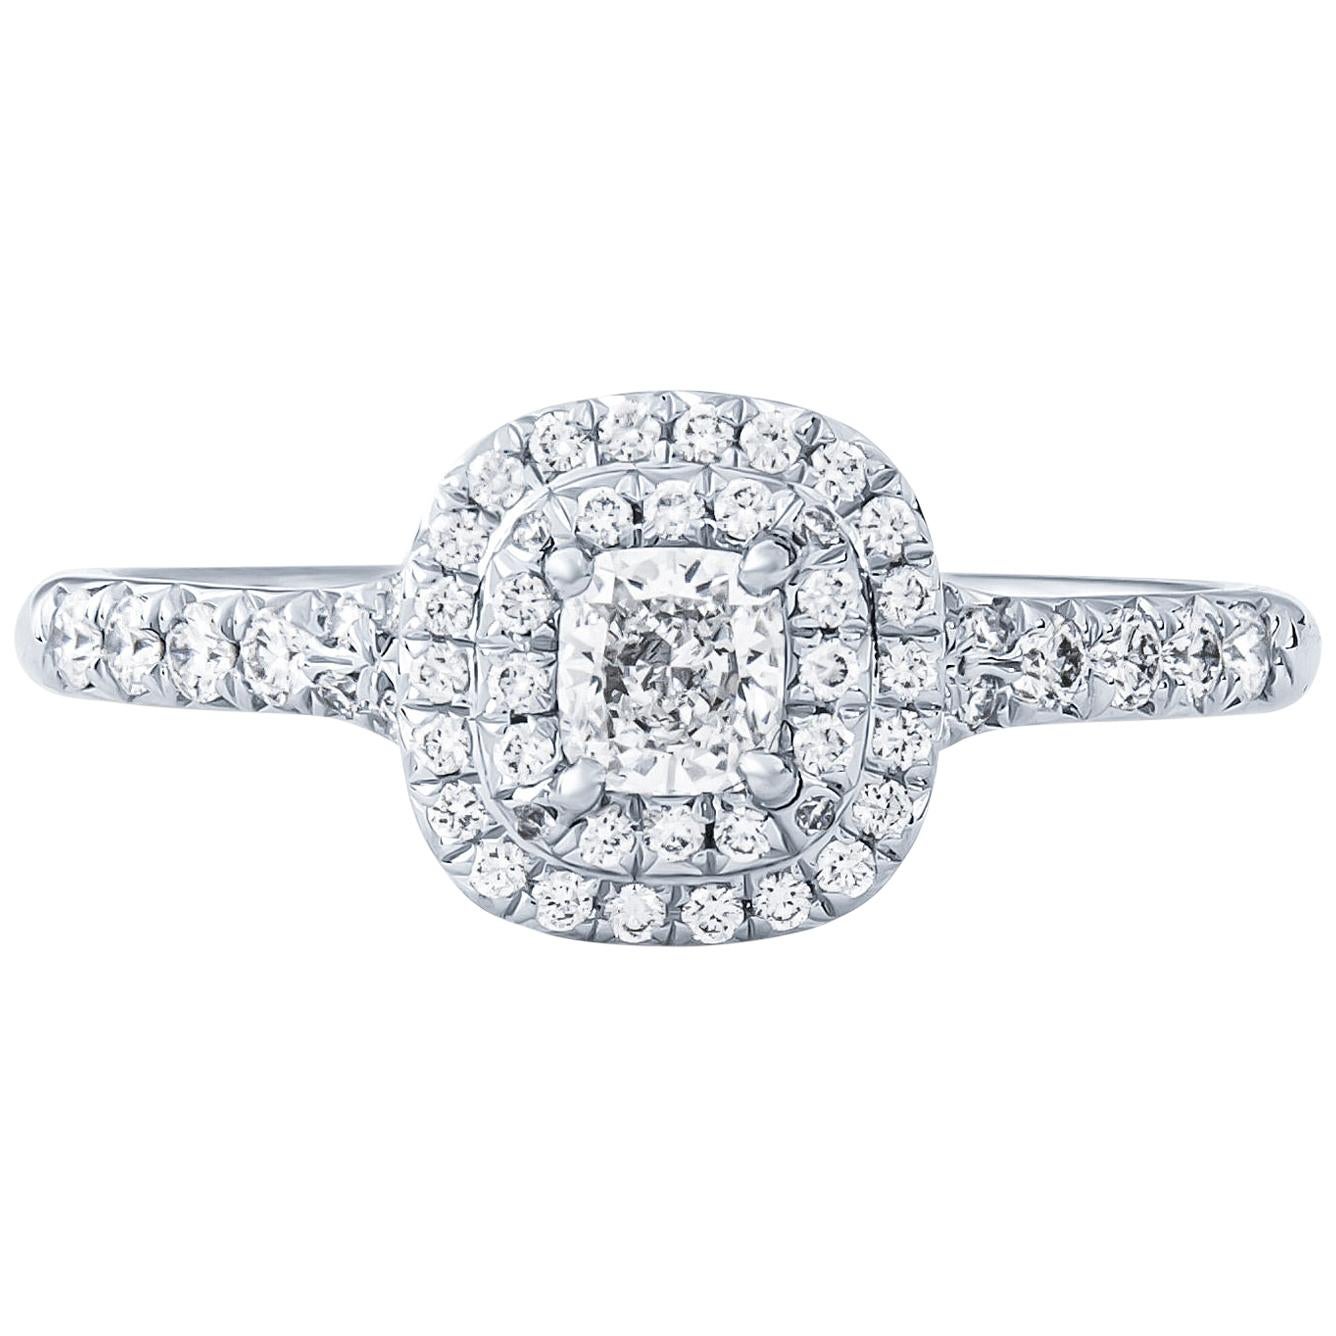 Tiffany & Co. Soleste 0.24 Carat Cushion Cut Diamond Engagement Ring, 18 Karat